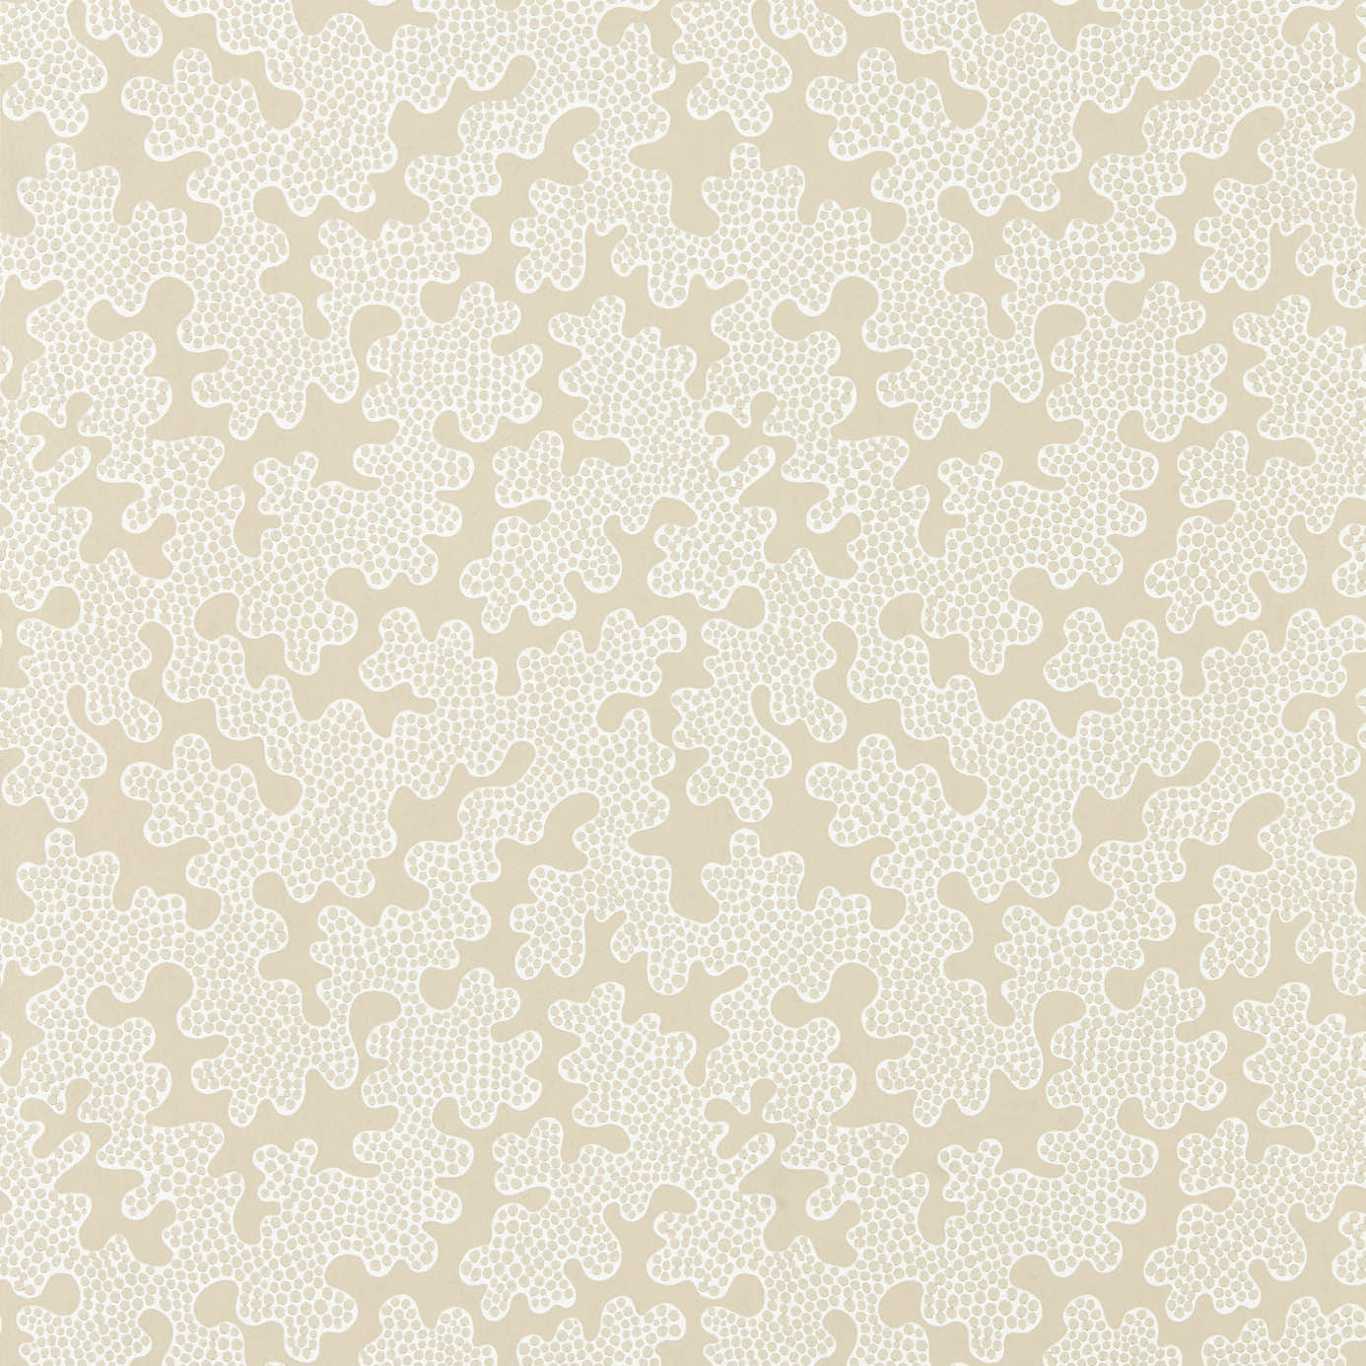 Zori Shiitake/Fig Blossom Wallpaper HQN3112932 by Harlequin